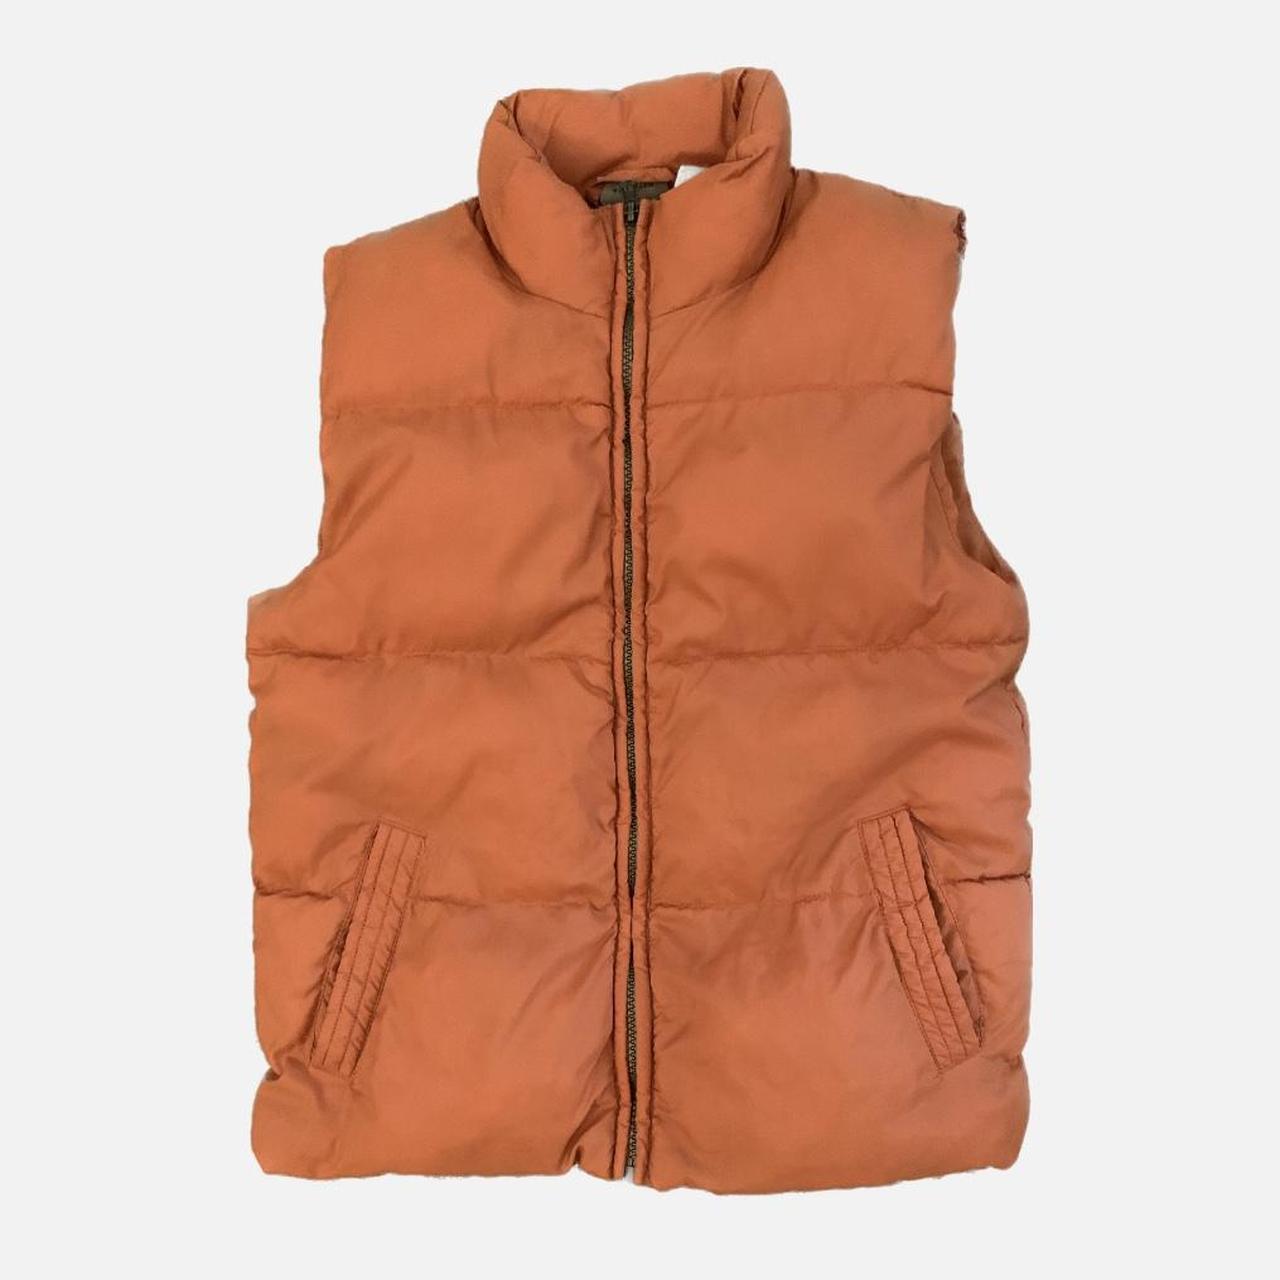 Orange Puffer Vest no flaws womens medium soft... - Depop